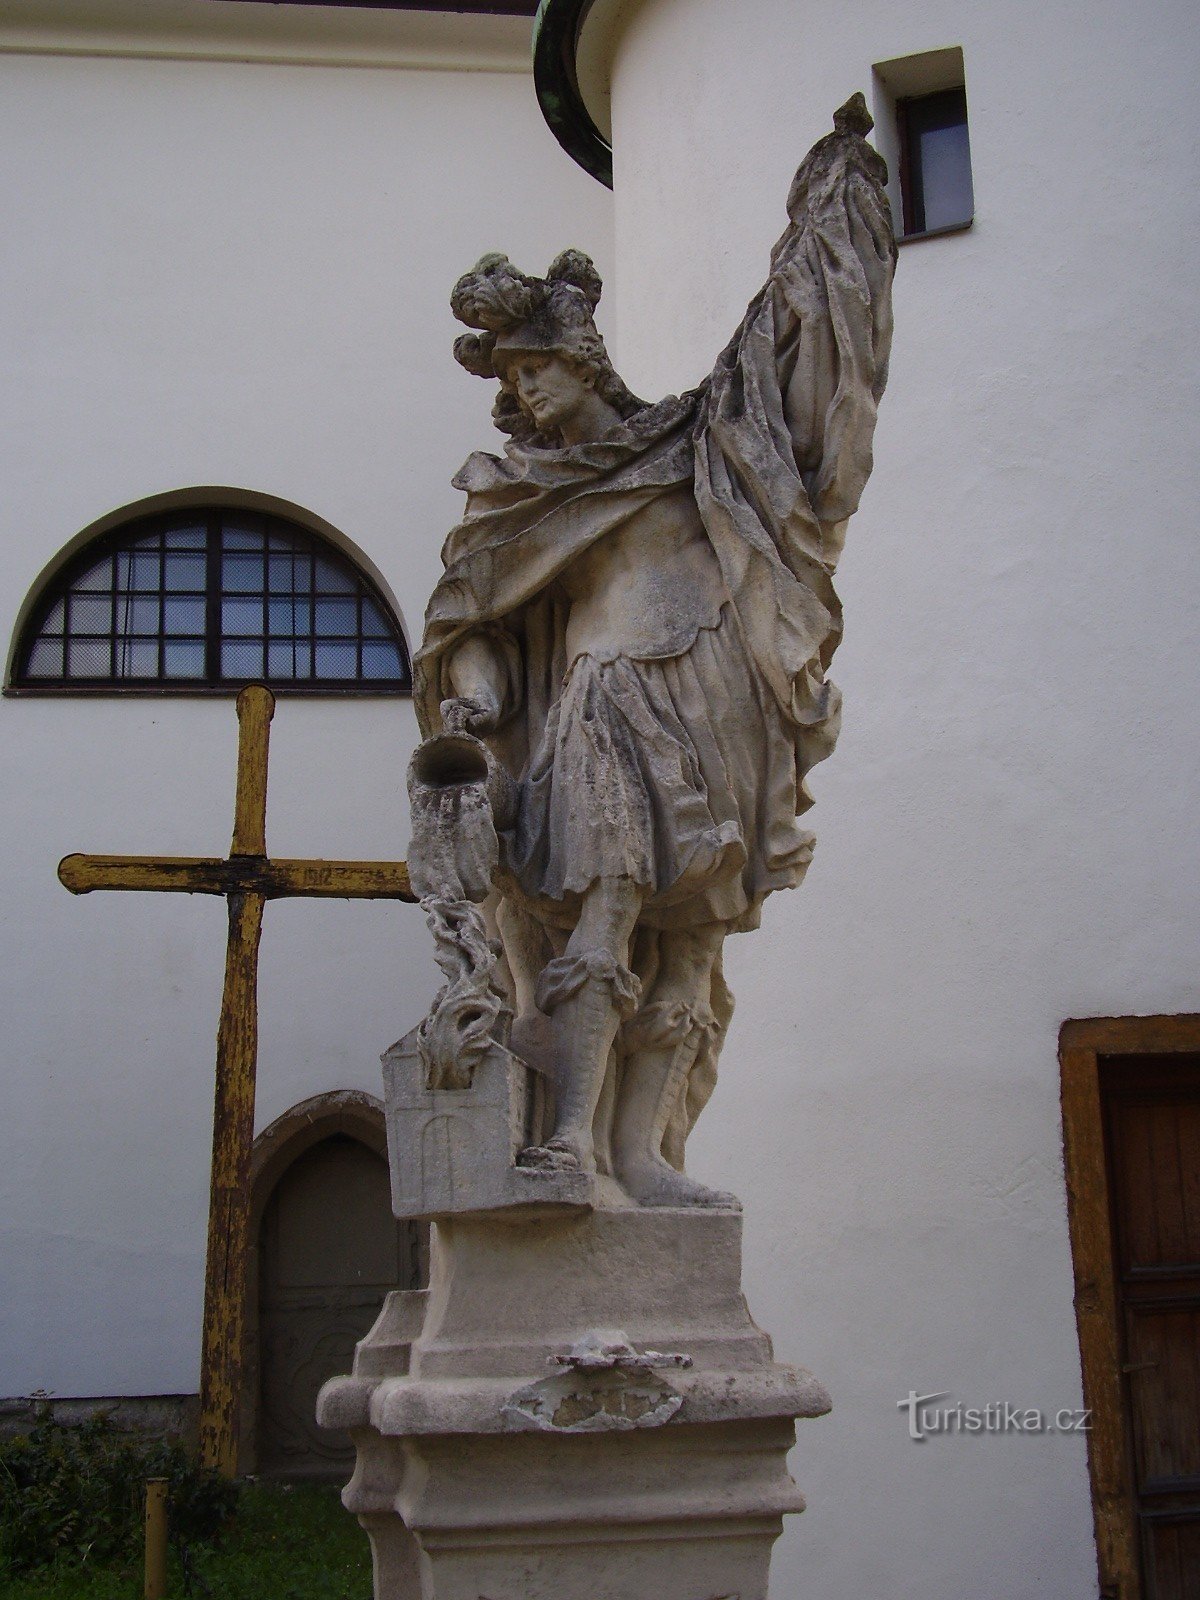 Staty av St. Florian i Rosice nära Brno